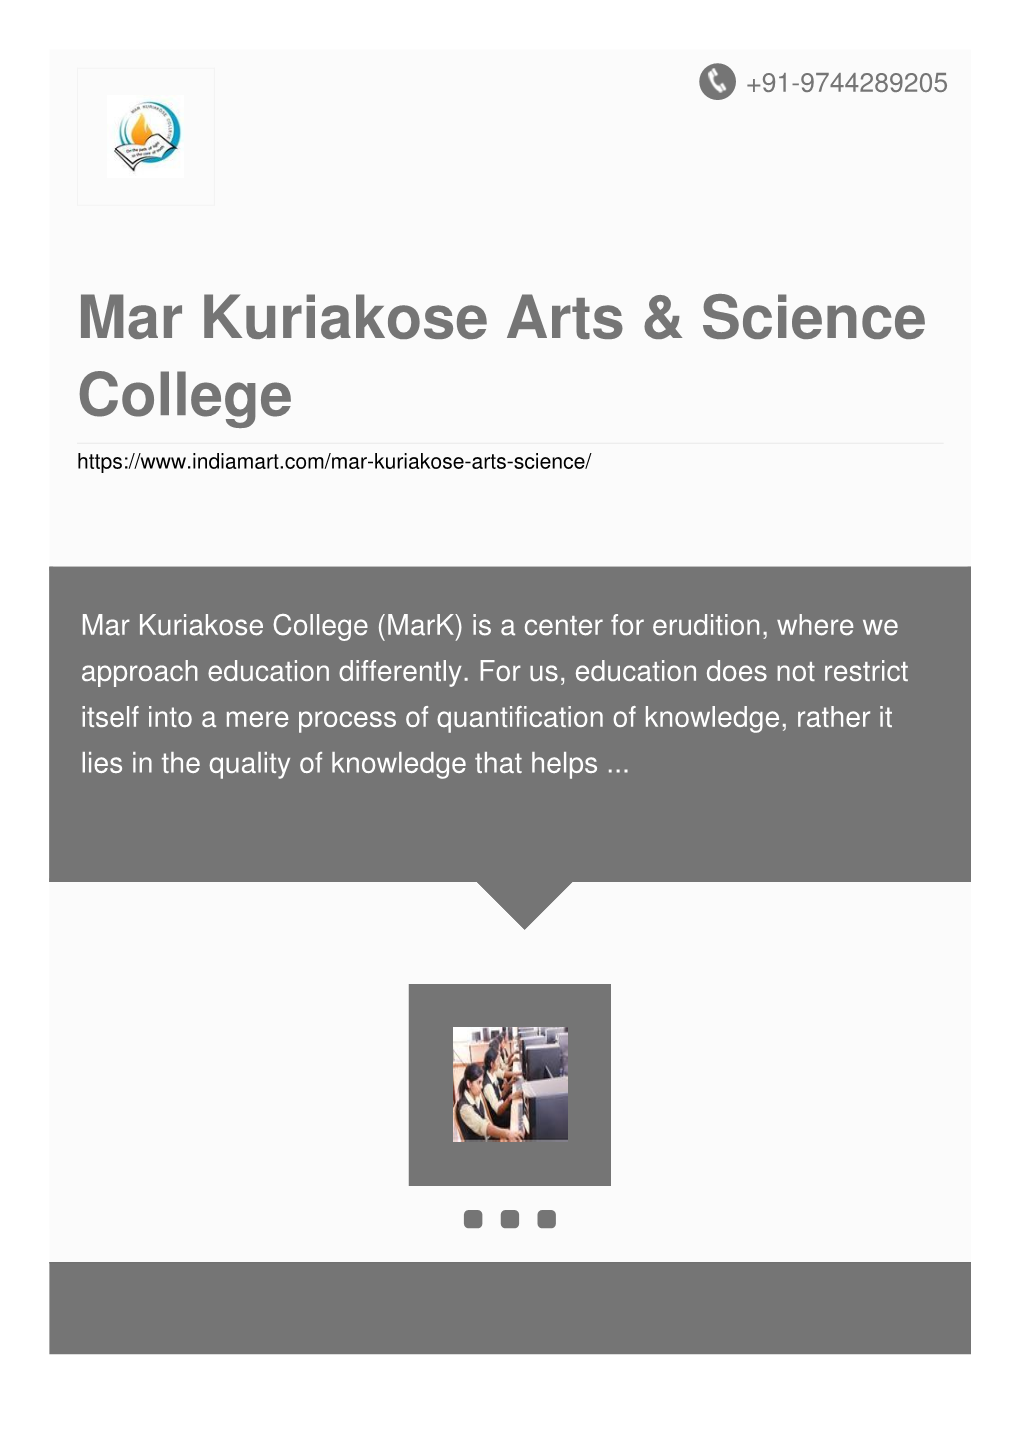 Mar Kuriakose Arts & Science College